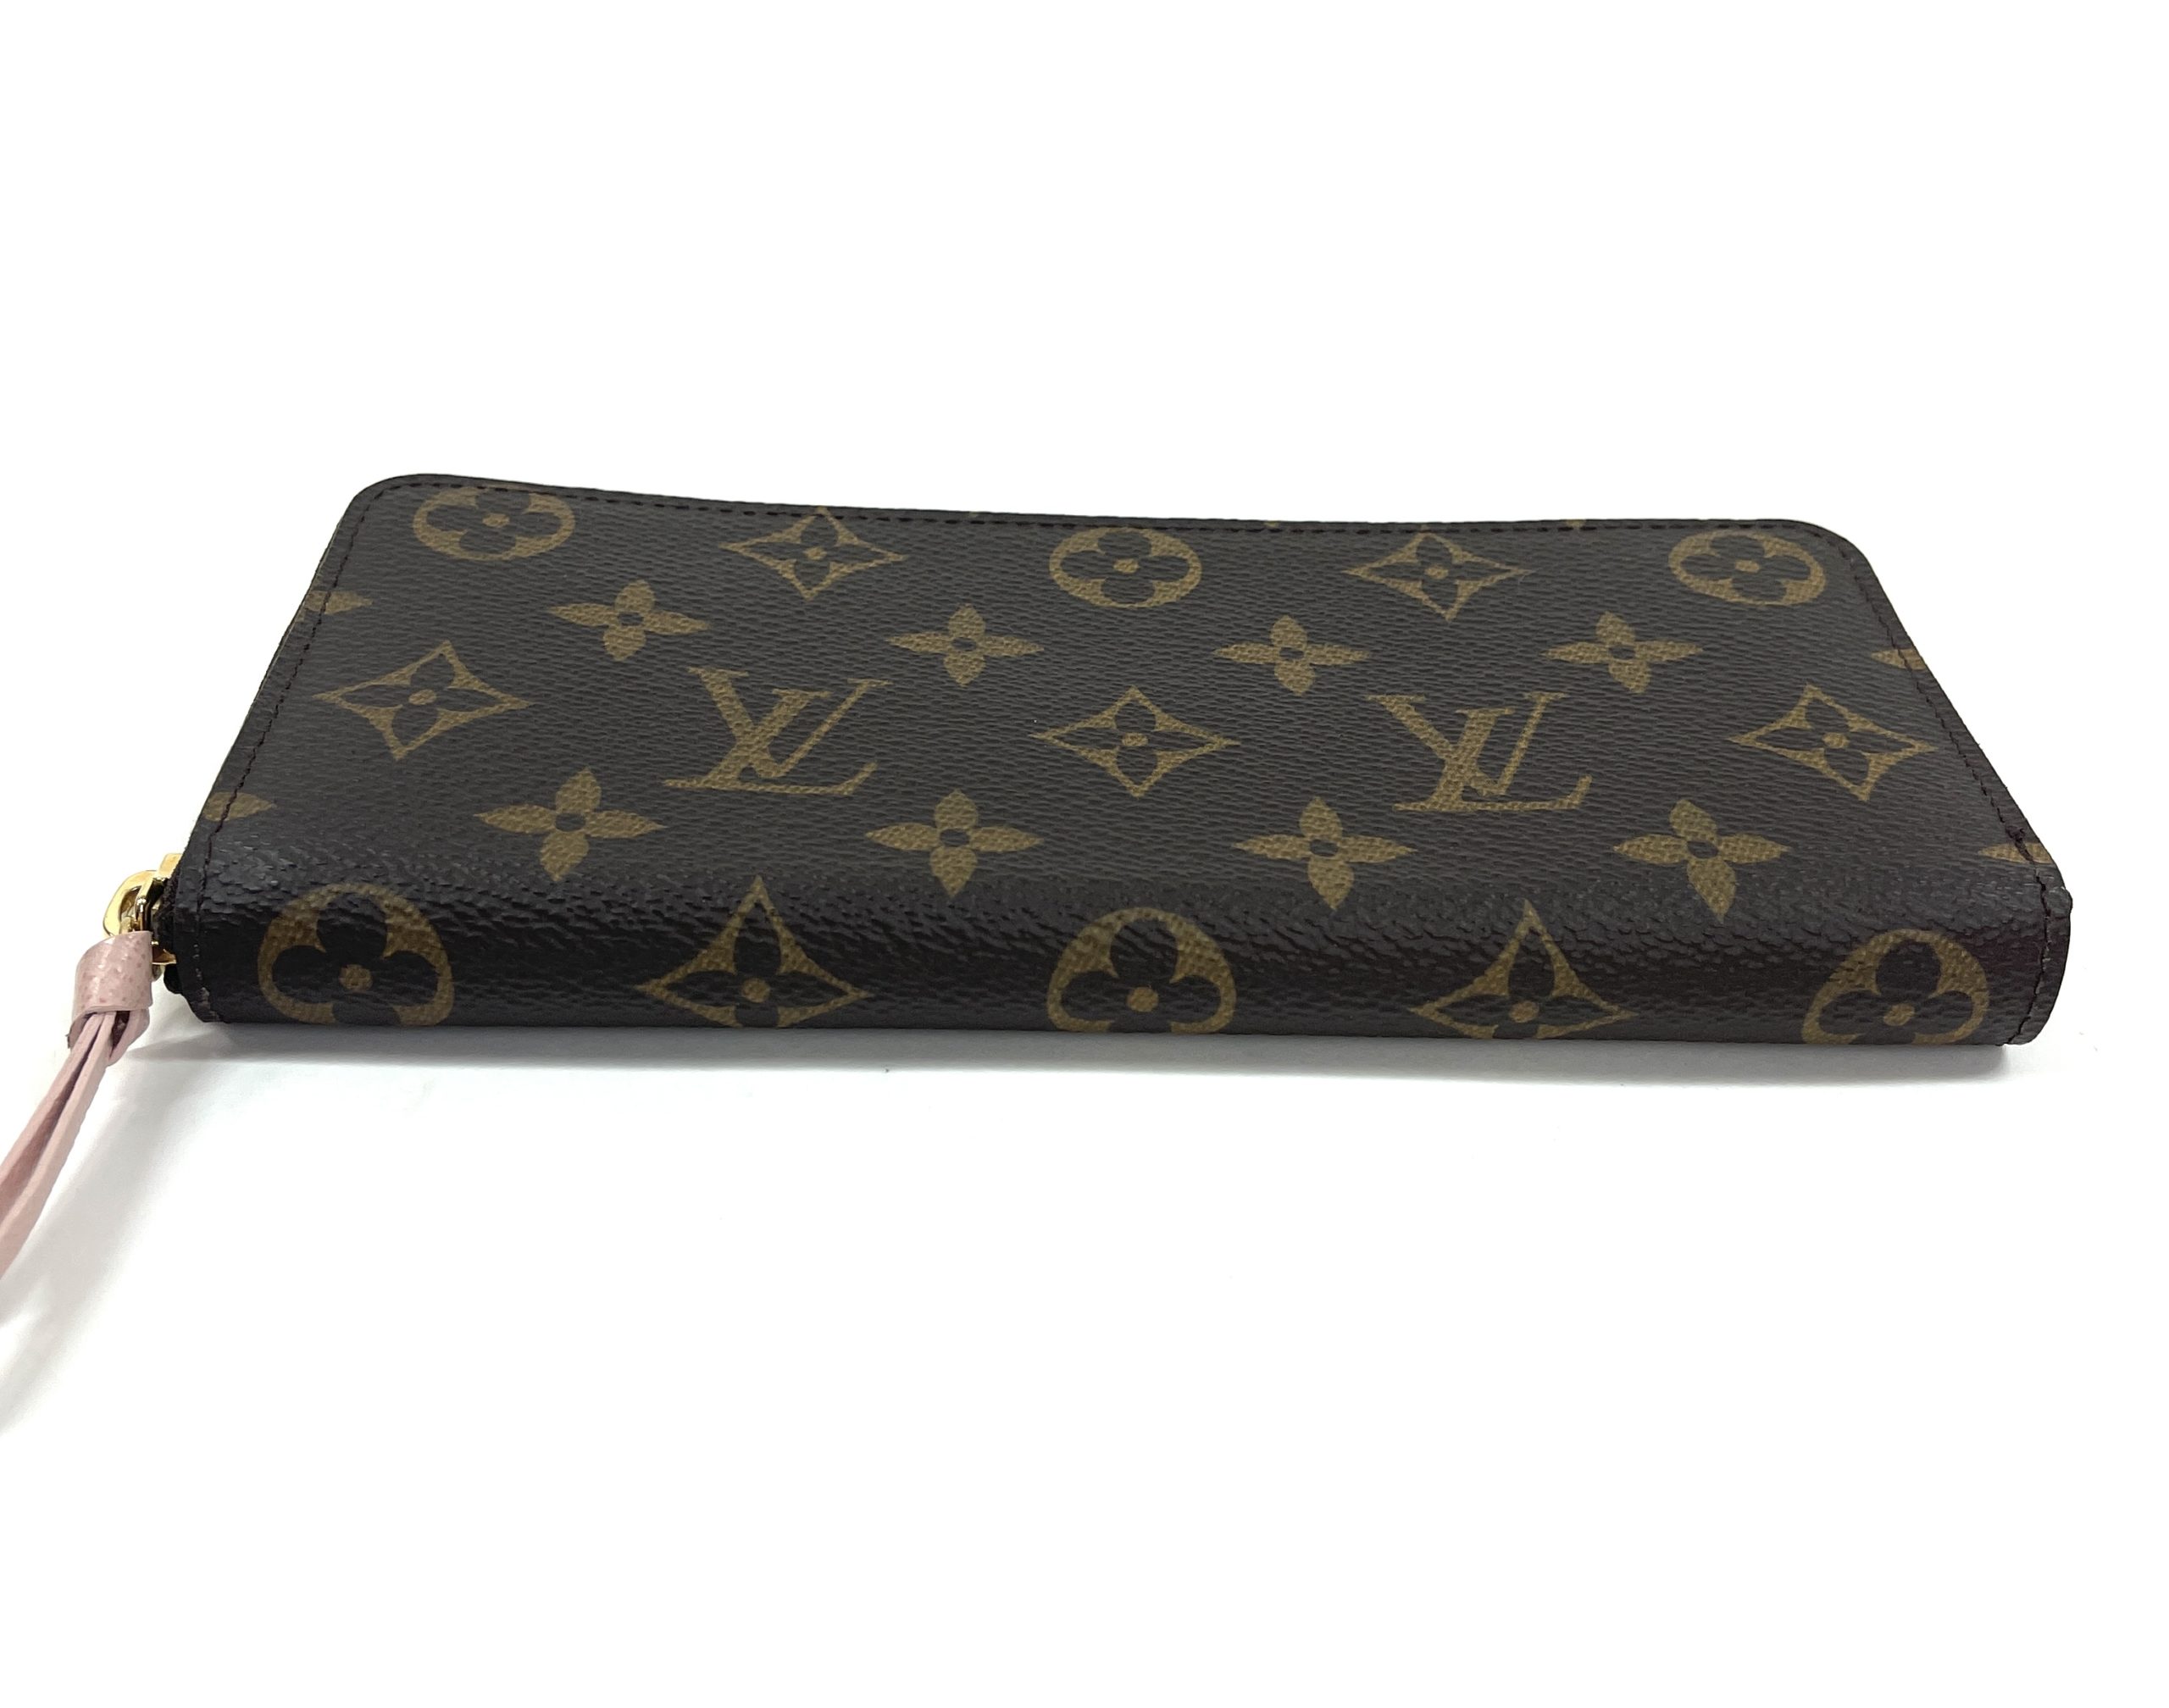 Louis Vuitton Clemence Wallet Monogram w/Rose Ballerine